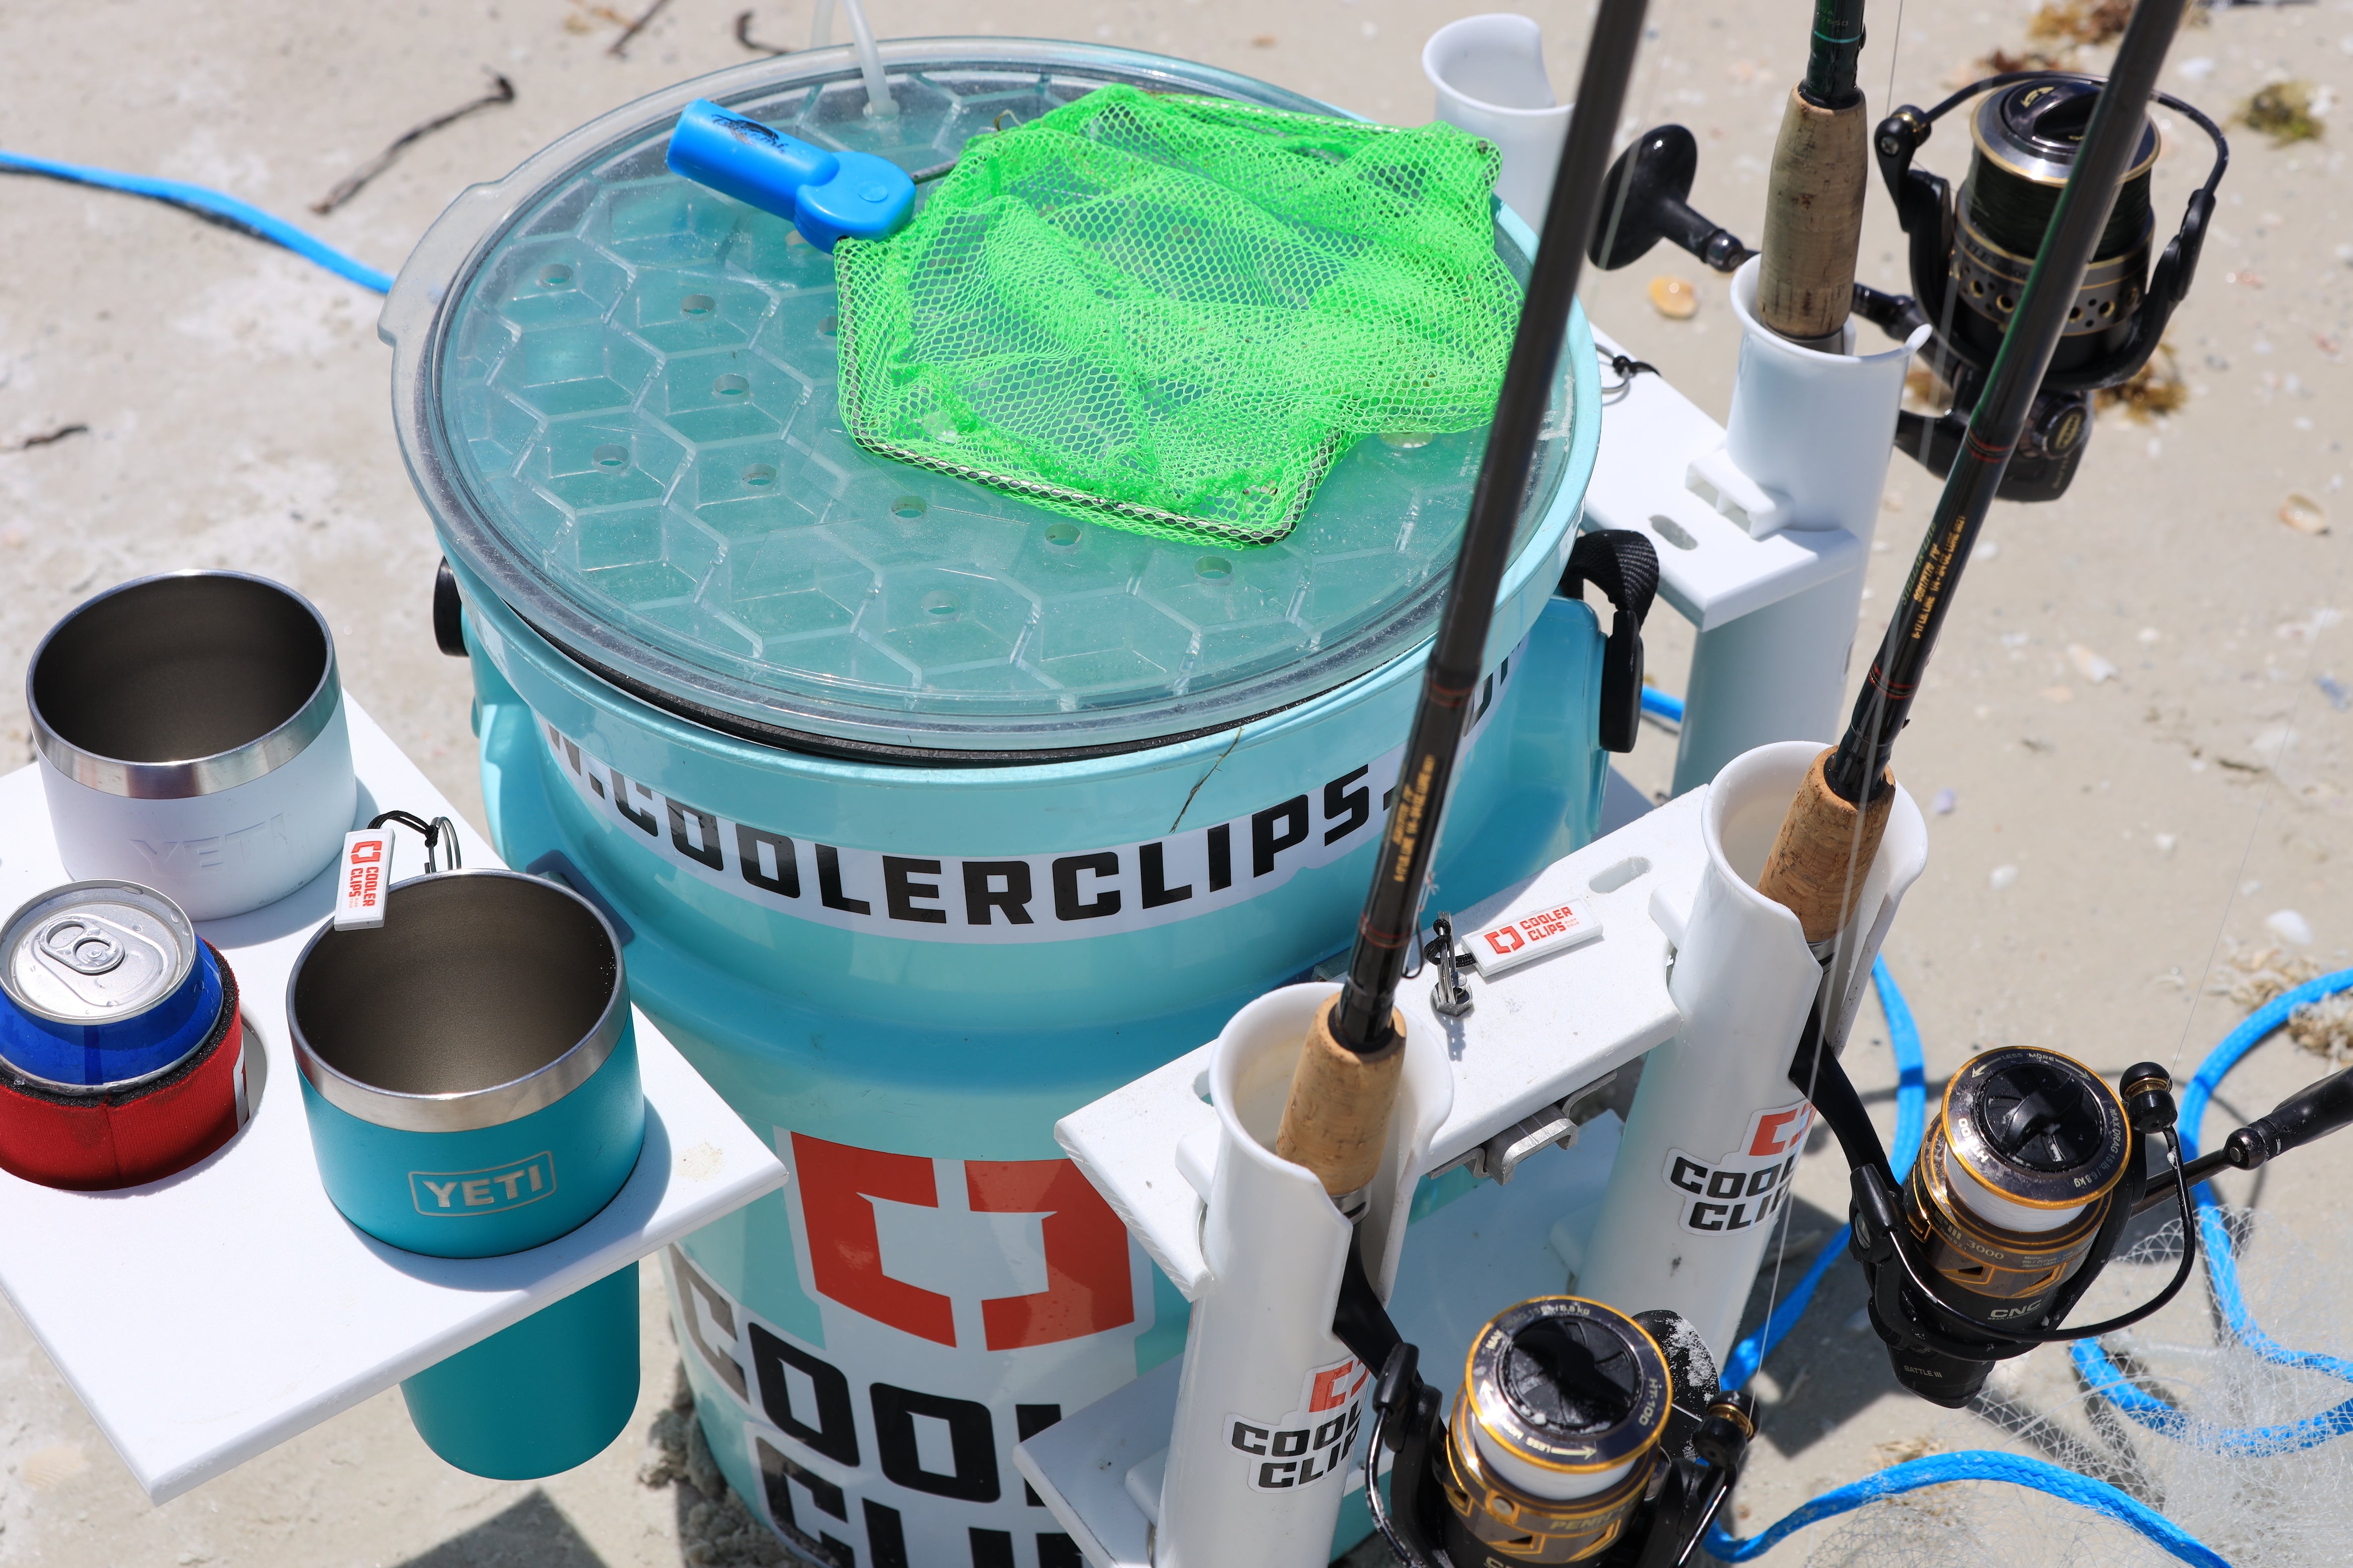 Fishing Rod Holder for YETI LoadOut Bucket – Tideline3D